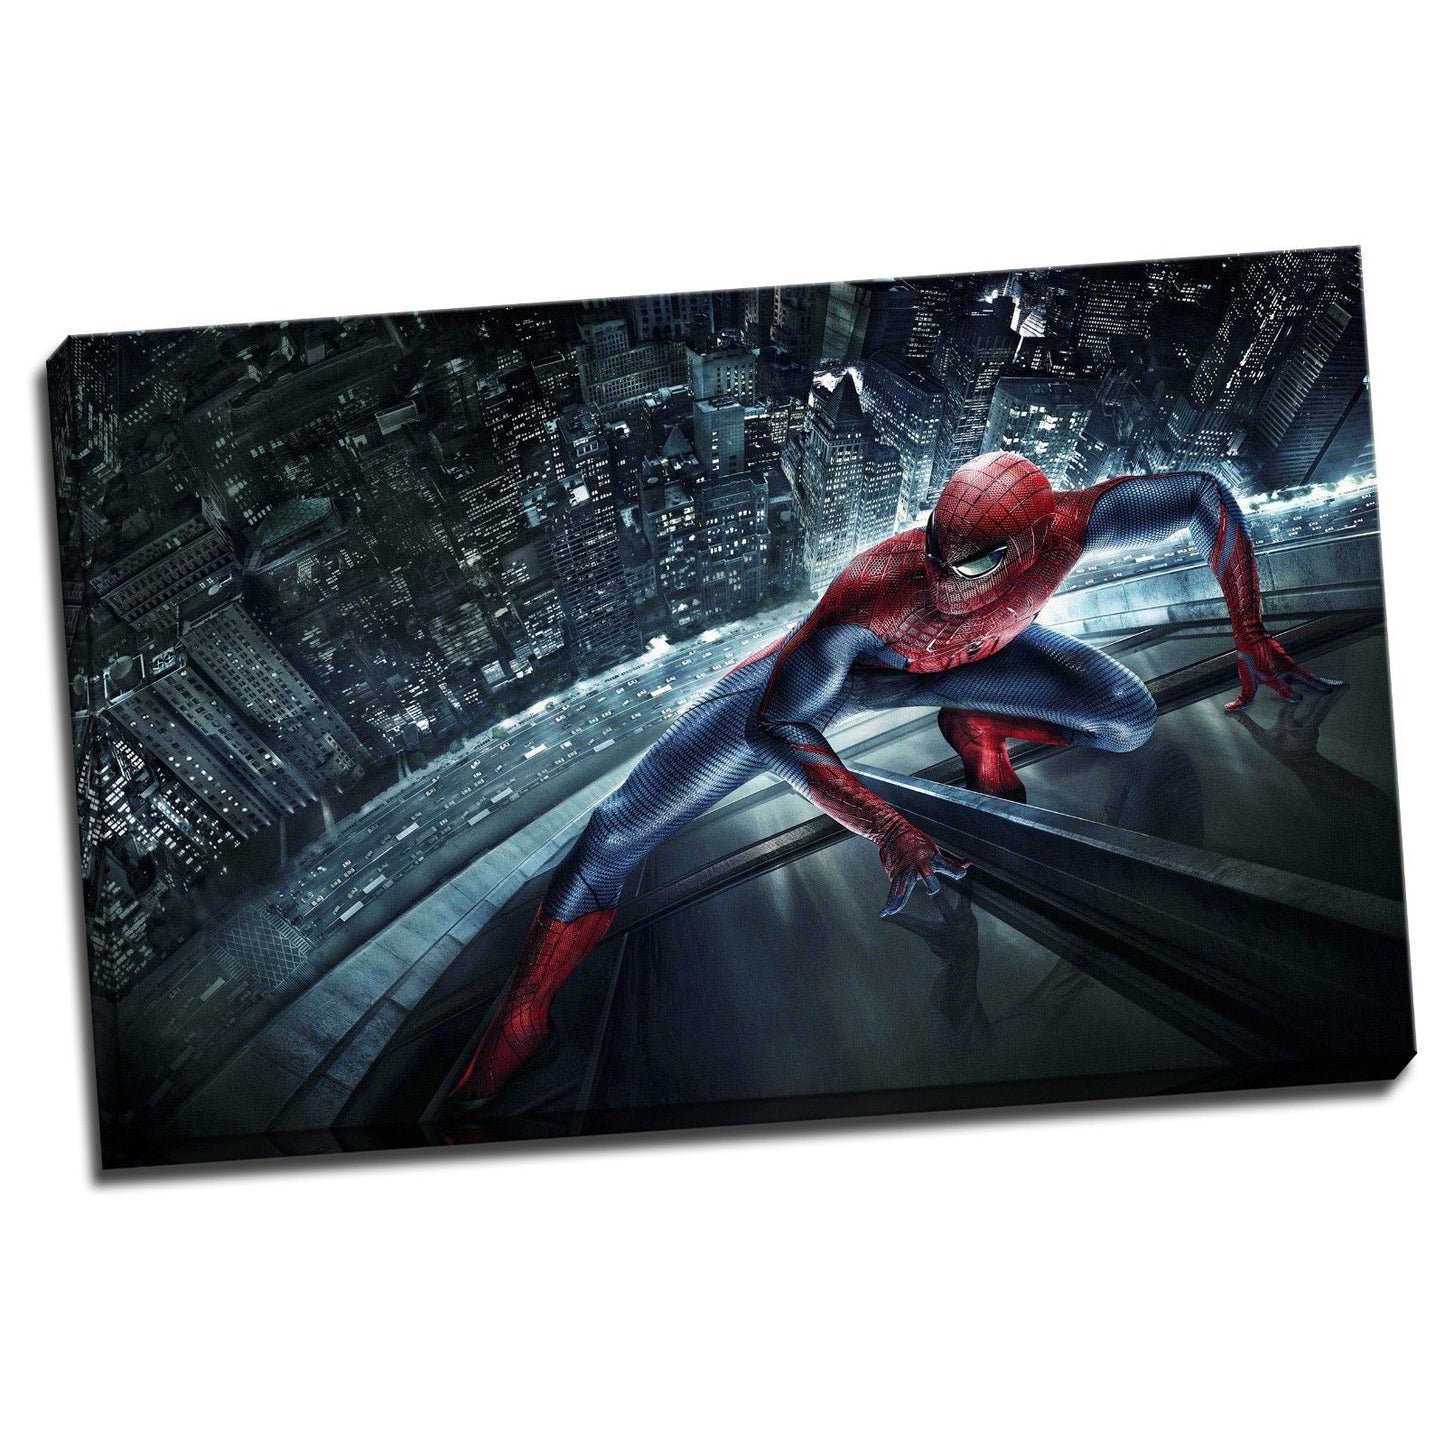 Spiderman Framed Canvas Print Spider man Home Decor gift super hero